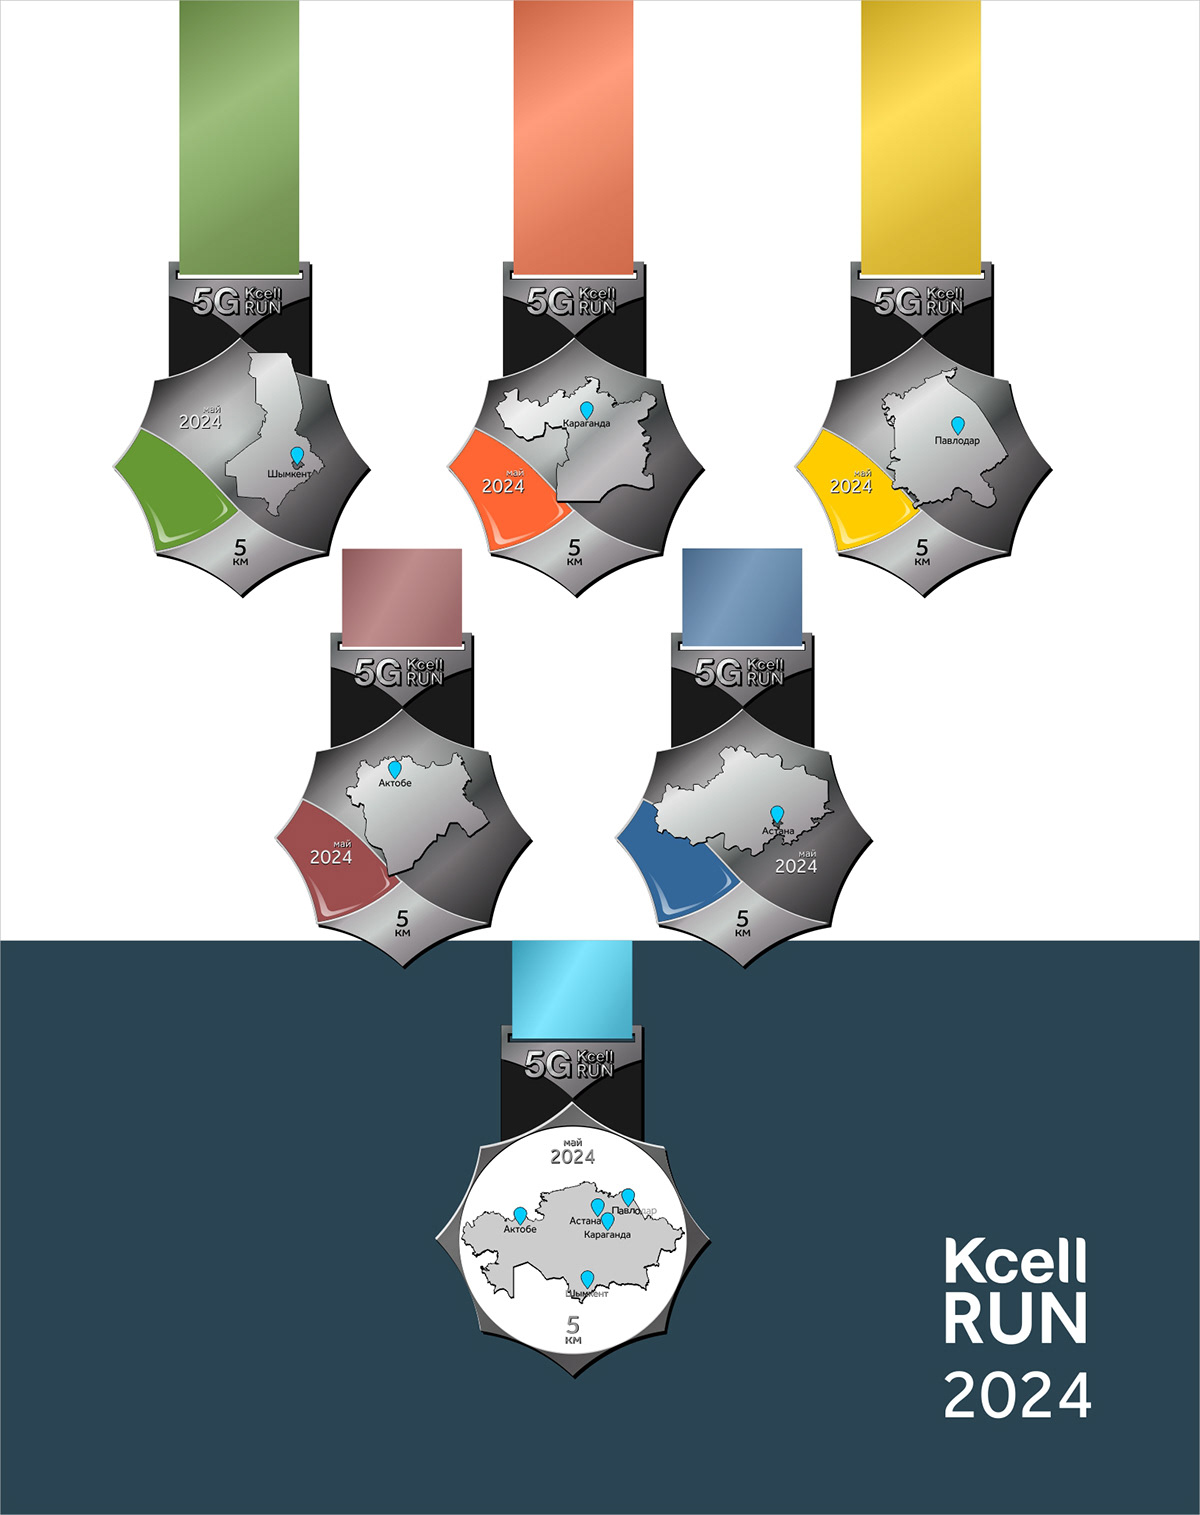 Medal medals Medal Design Marathon halfmarathon медаль medali дизайн медали дизайн медалей medals design